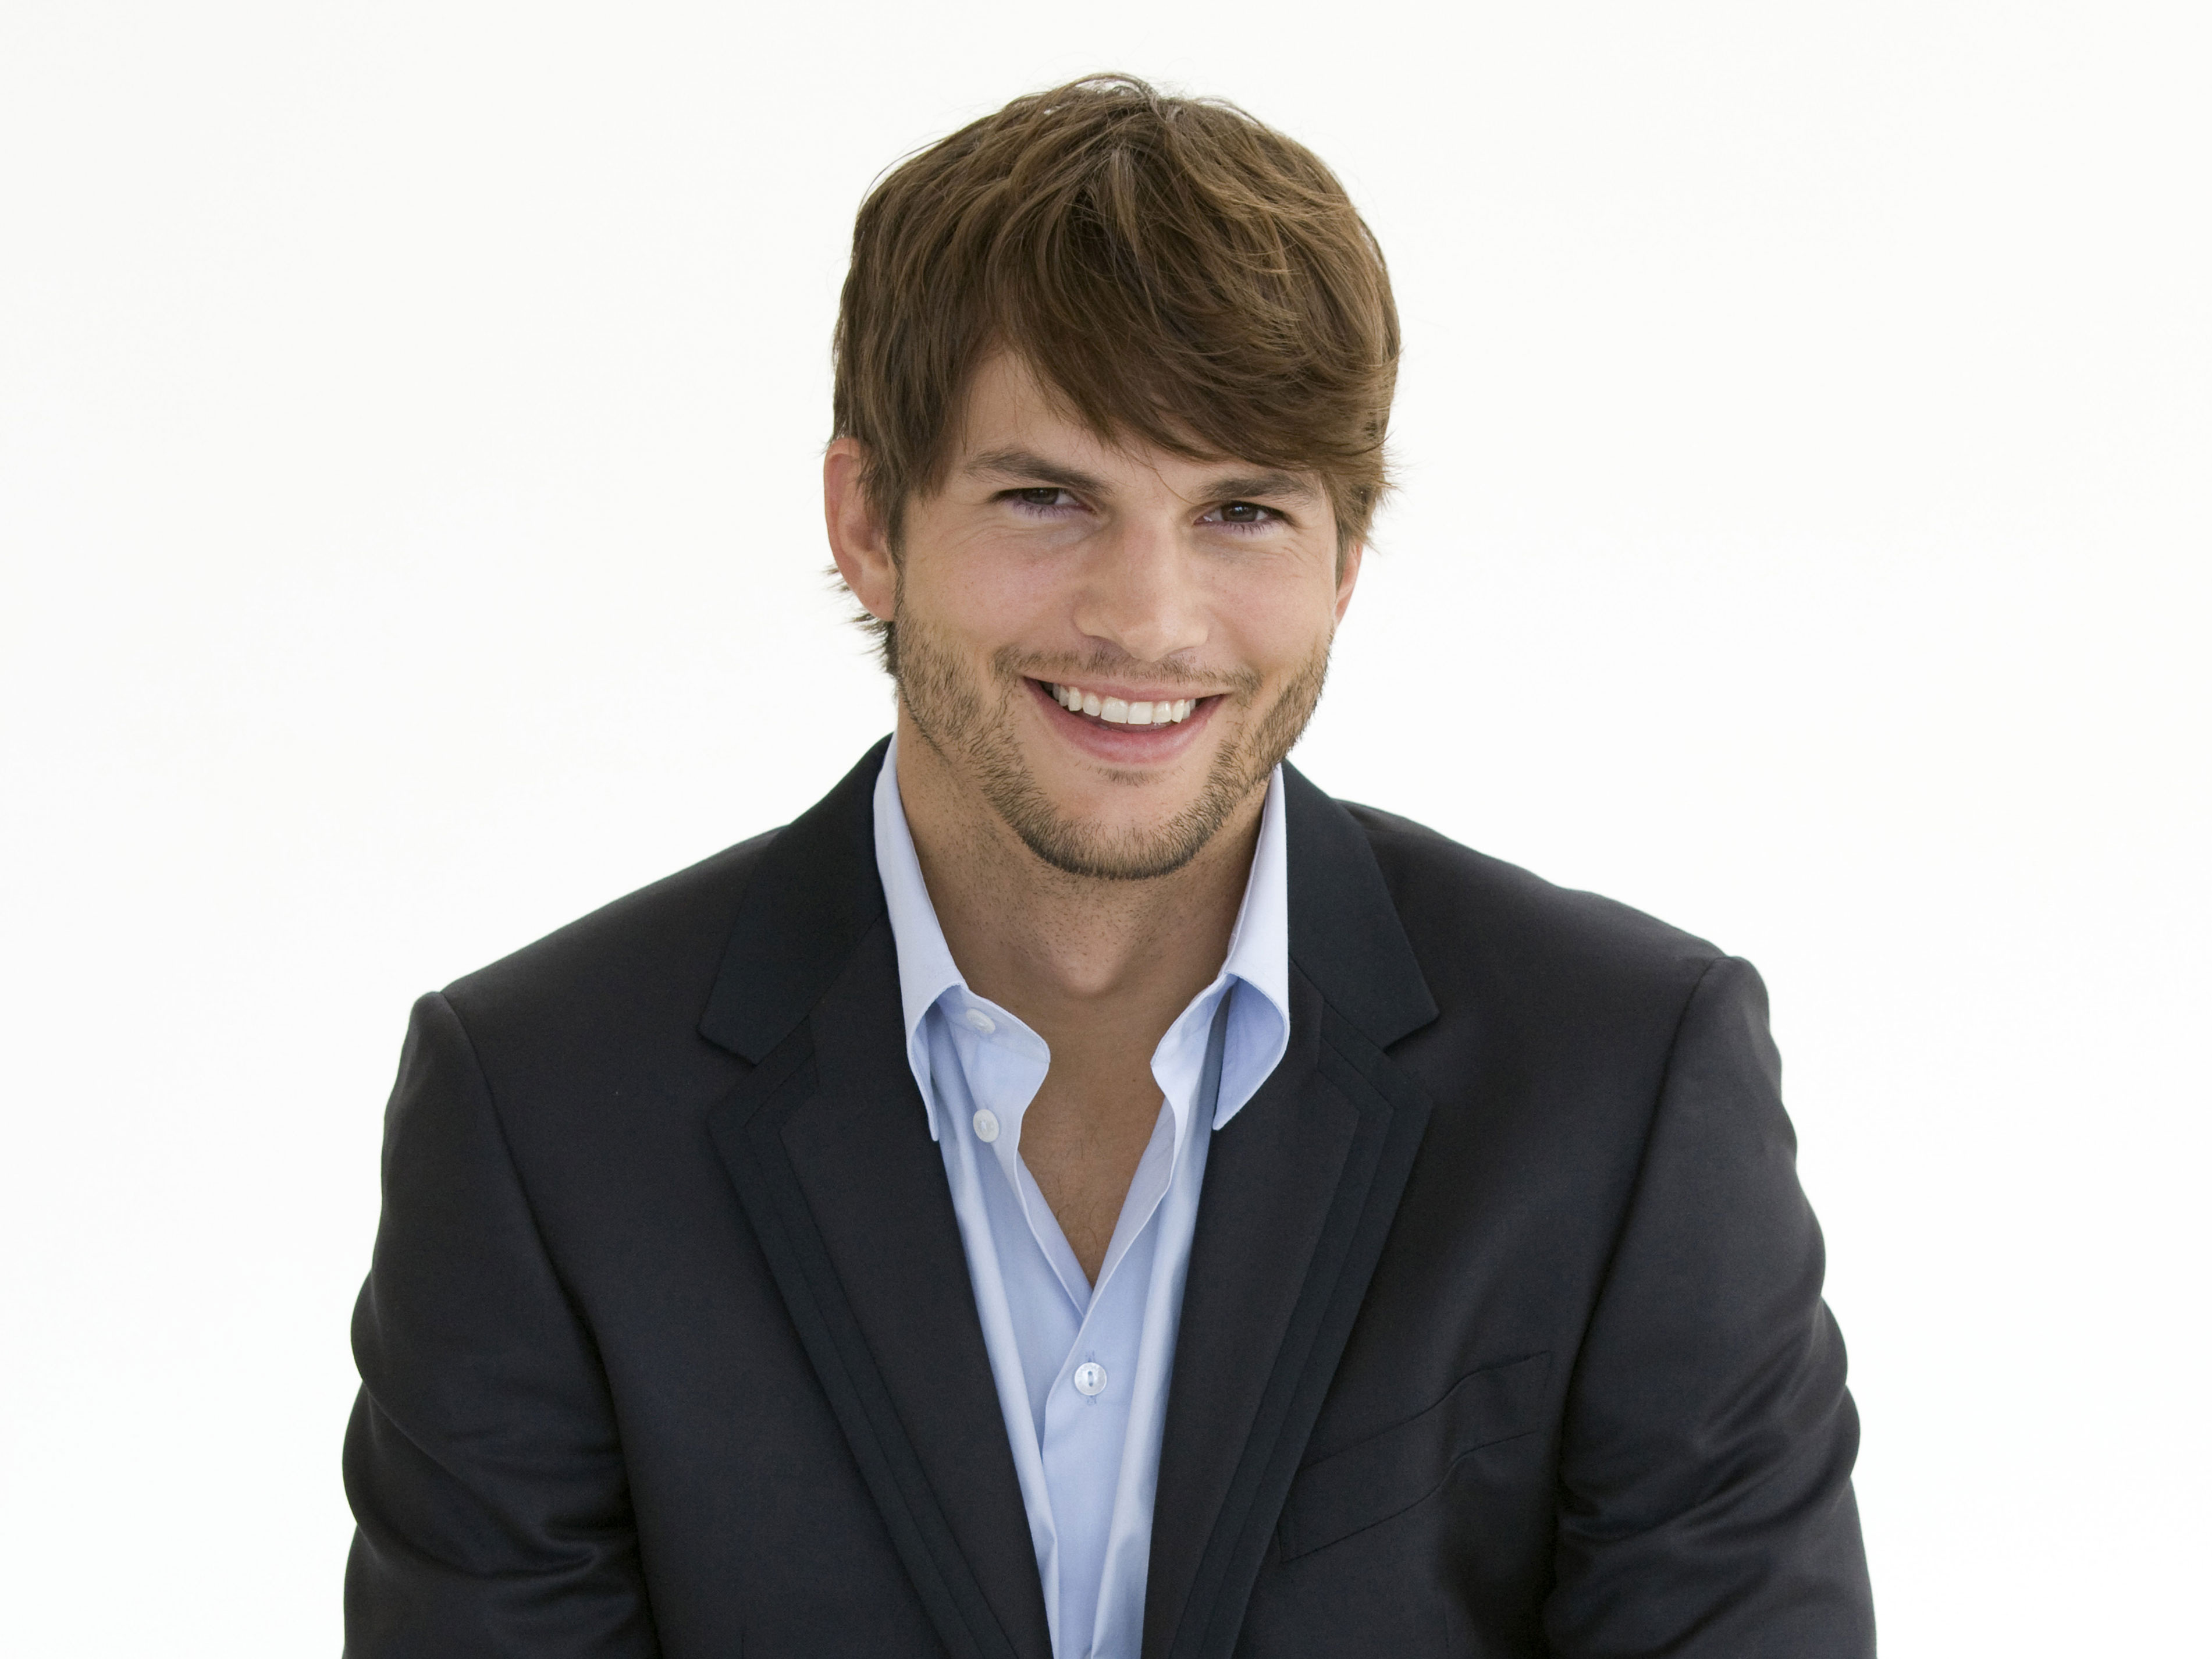 Los mejores fondos de pantalla de Ashton Kutcher para la pantalla del teléfono